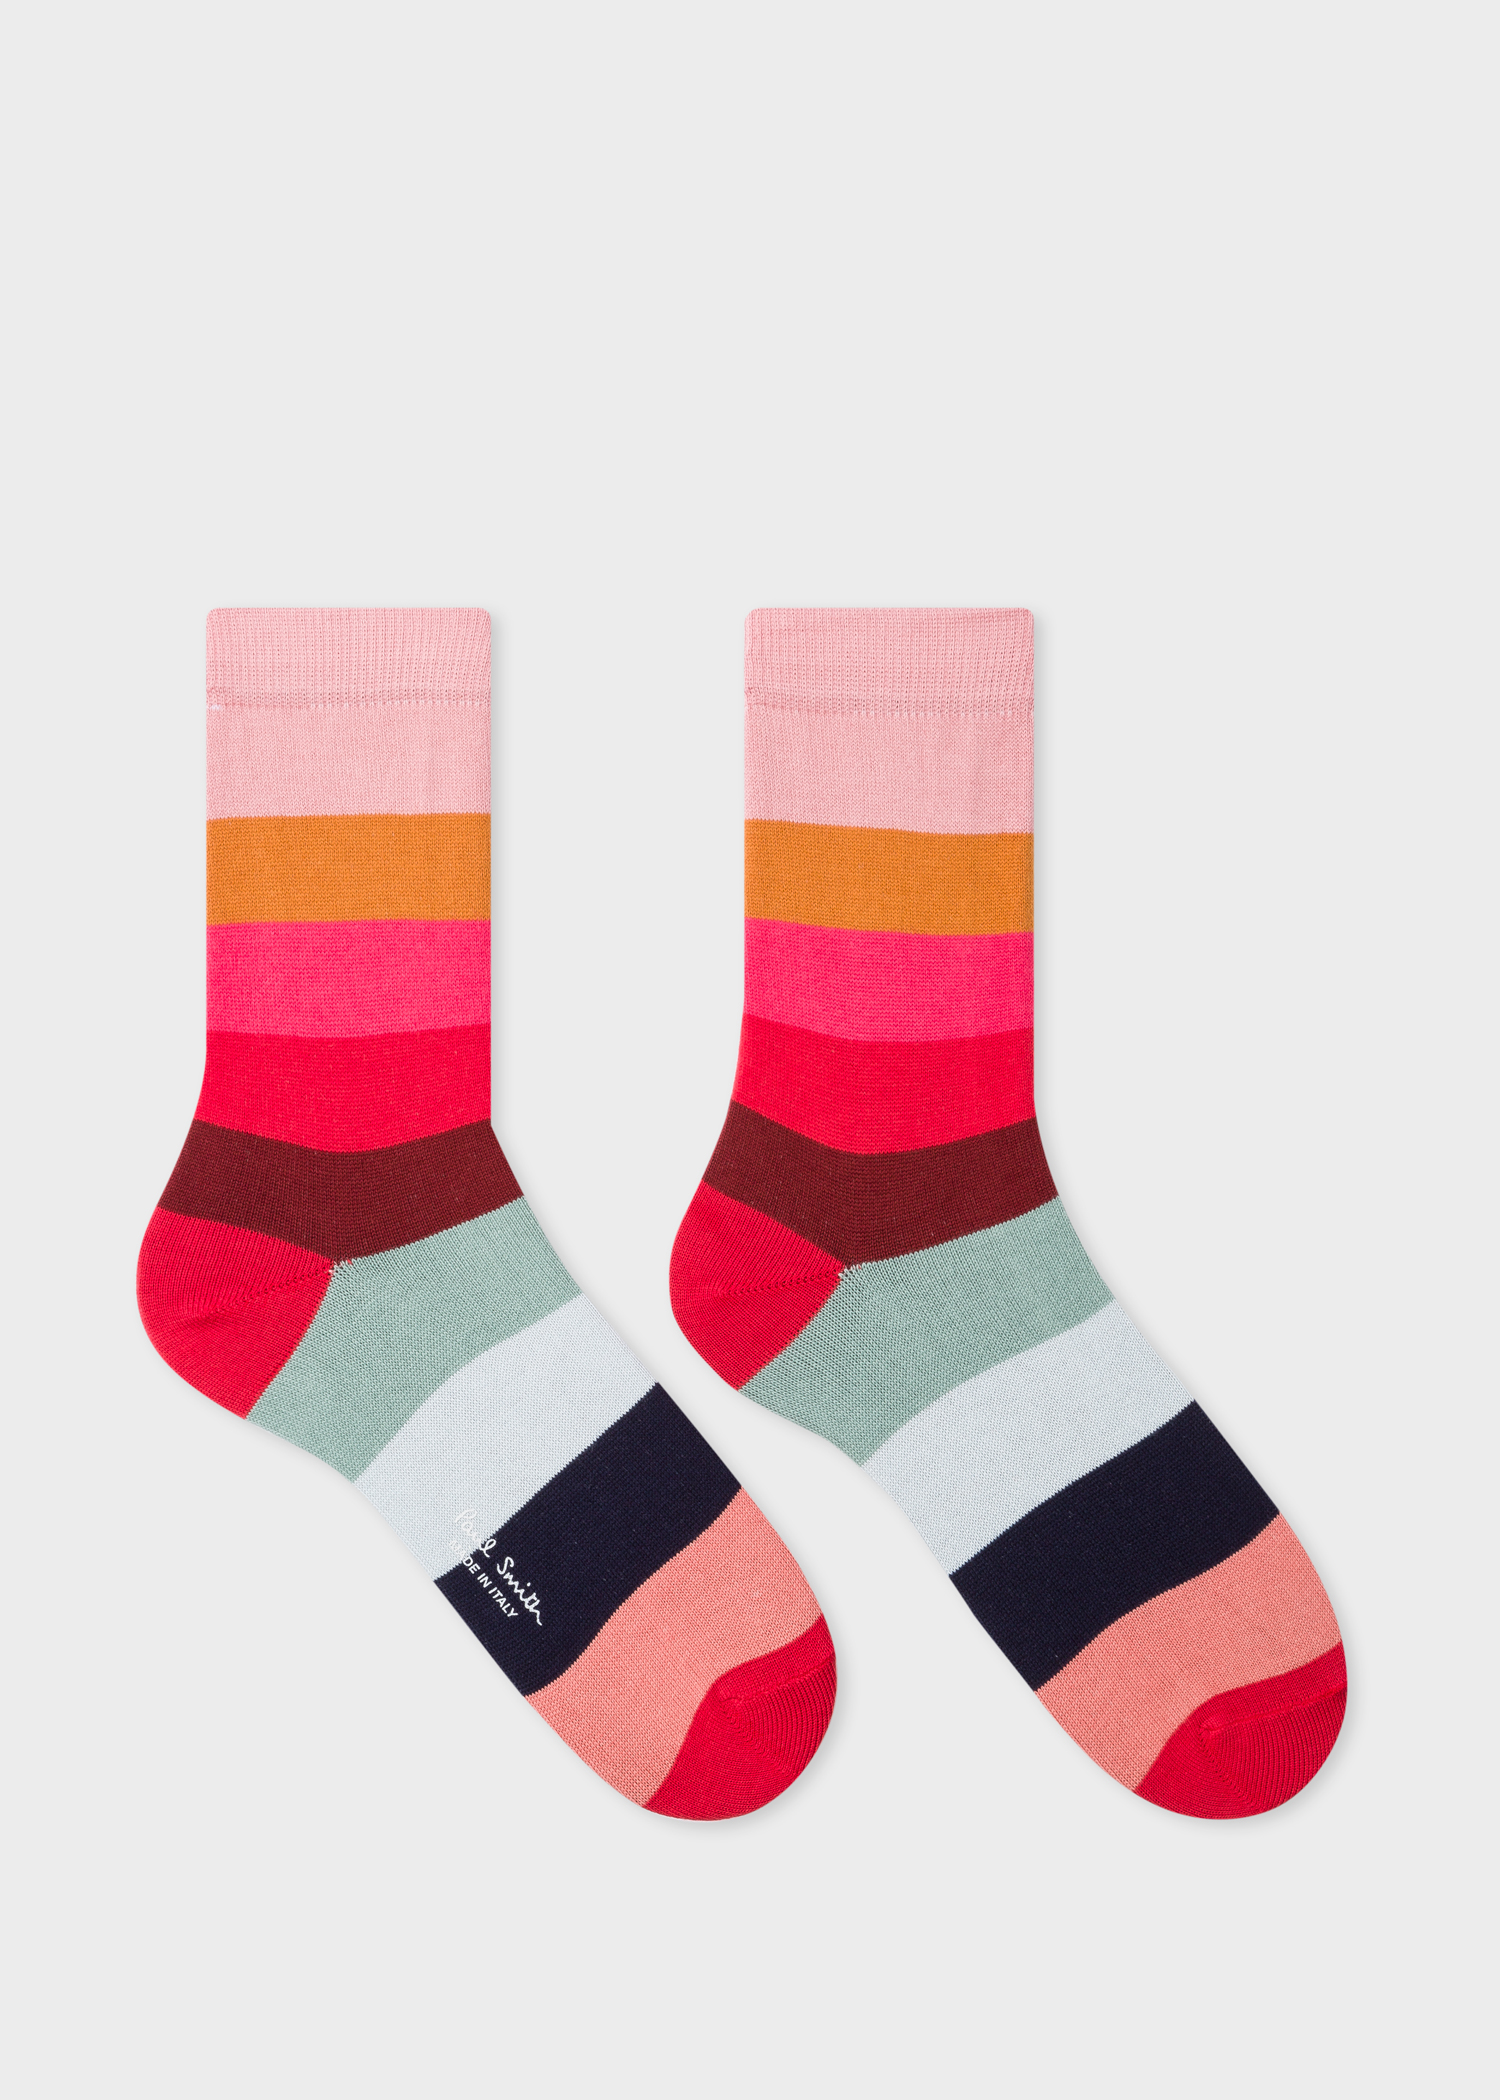 Third pair view - Women's Pink Mixed Stripe Socks Three Pack Paul Smith